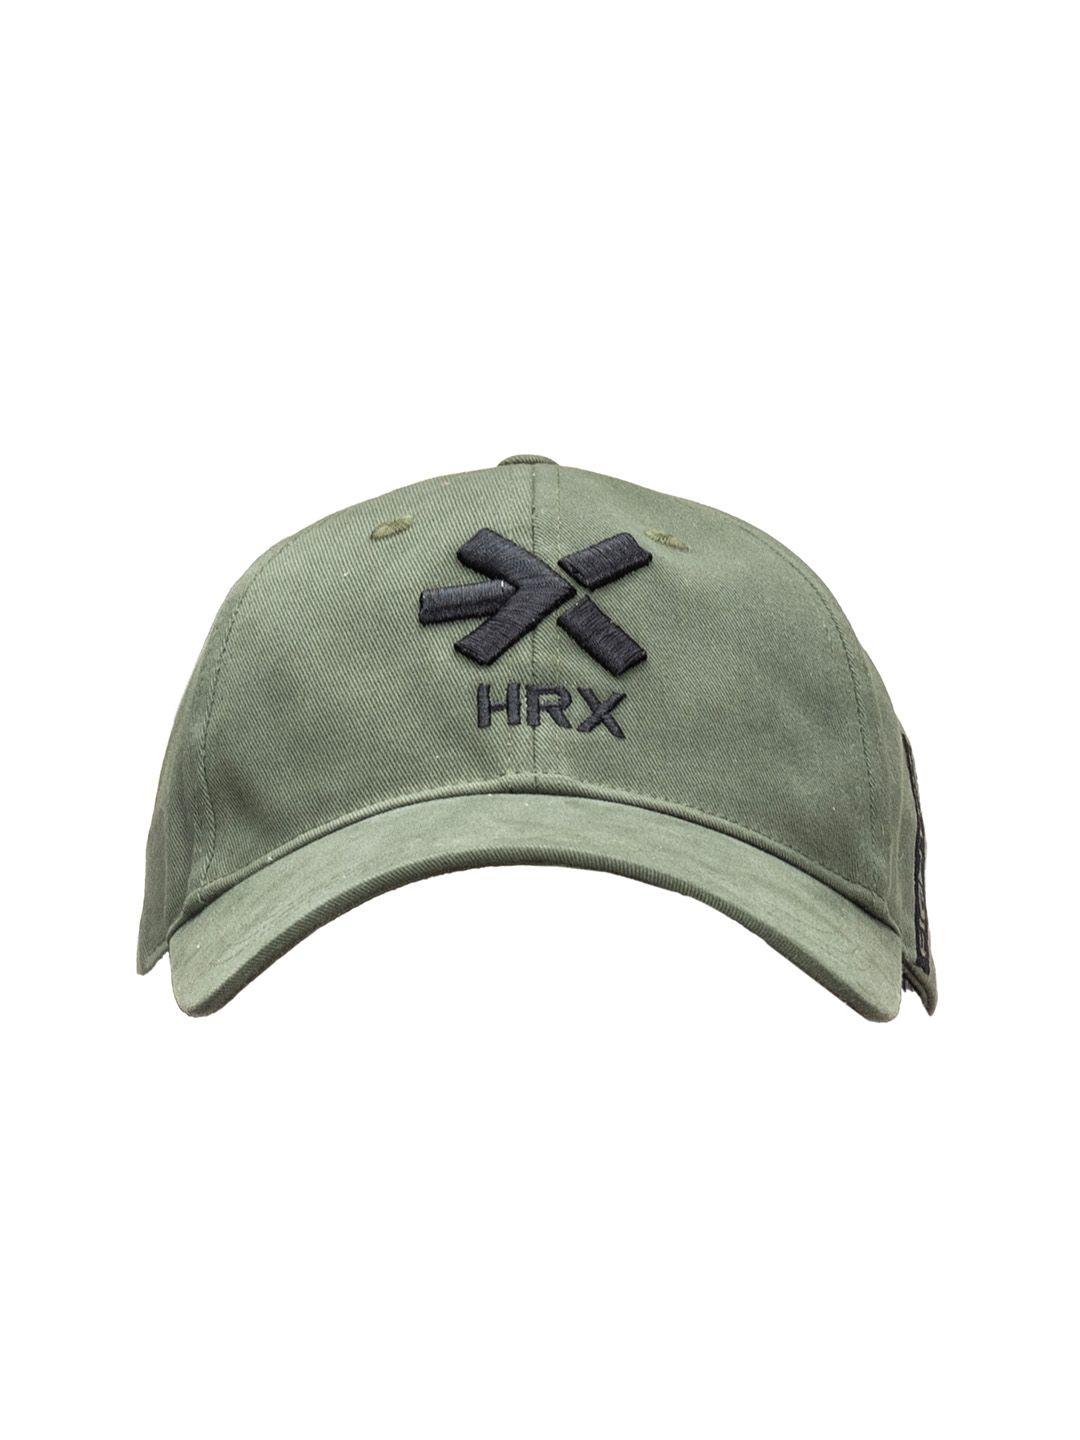 hrx by hrithik roshan olive green embroidered cotton visor cap